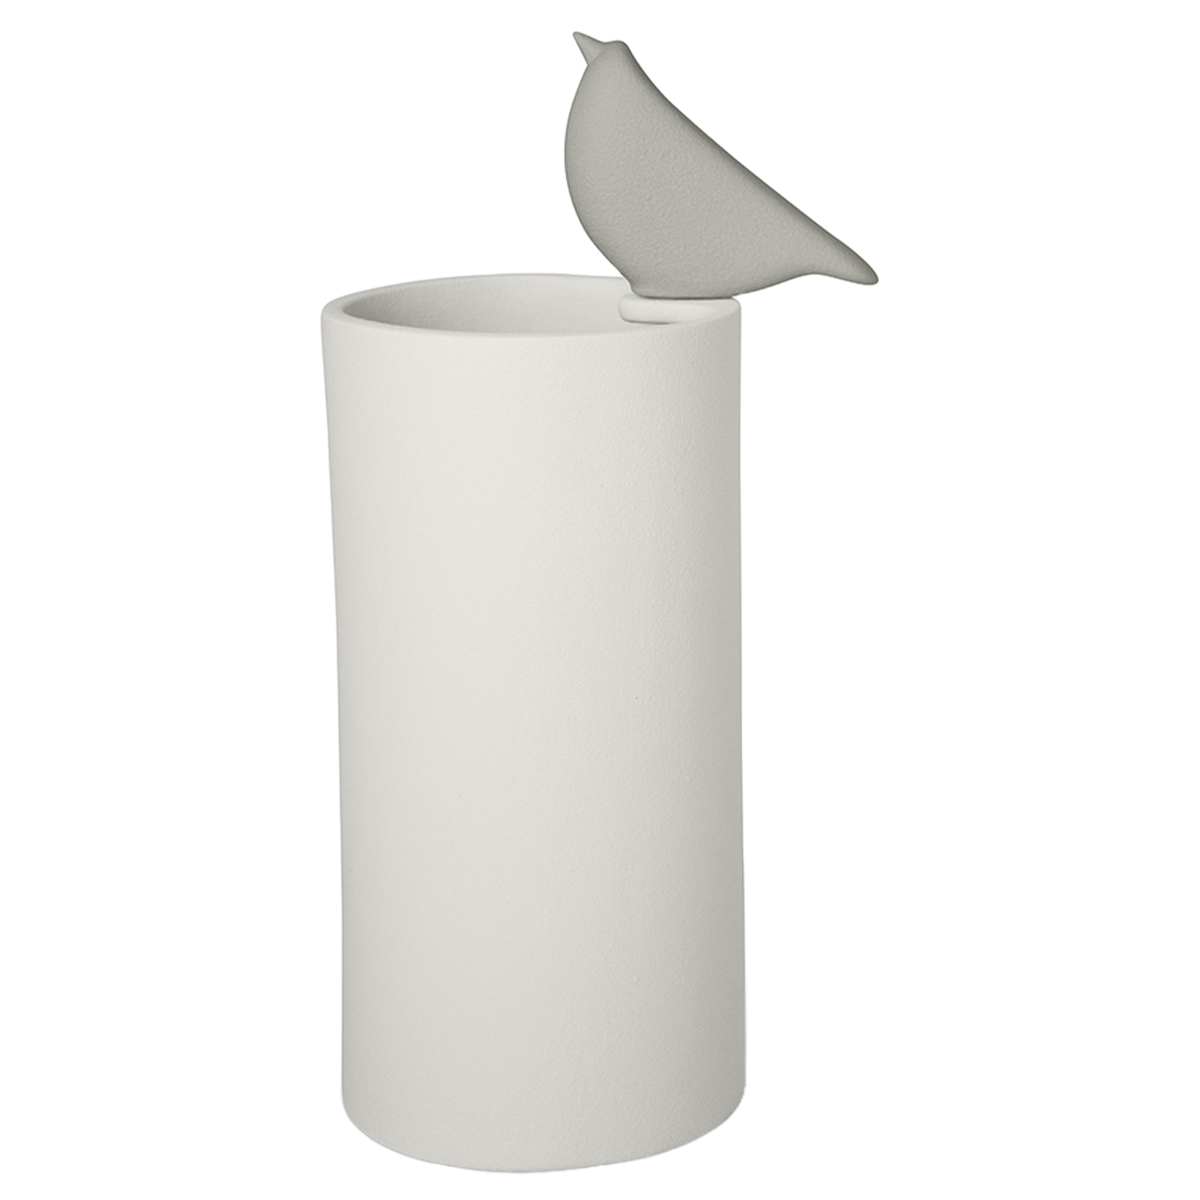 Vaso design Colibrì 2, grigio-latte by Lineasette